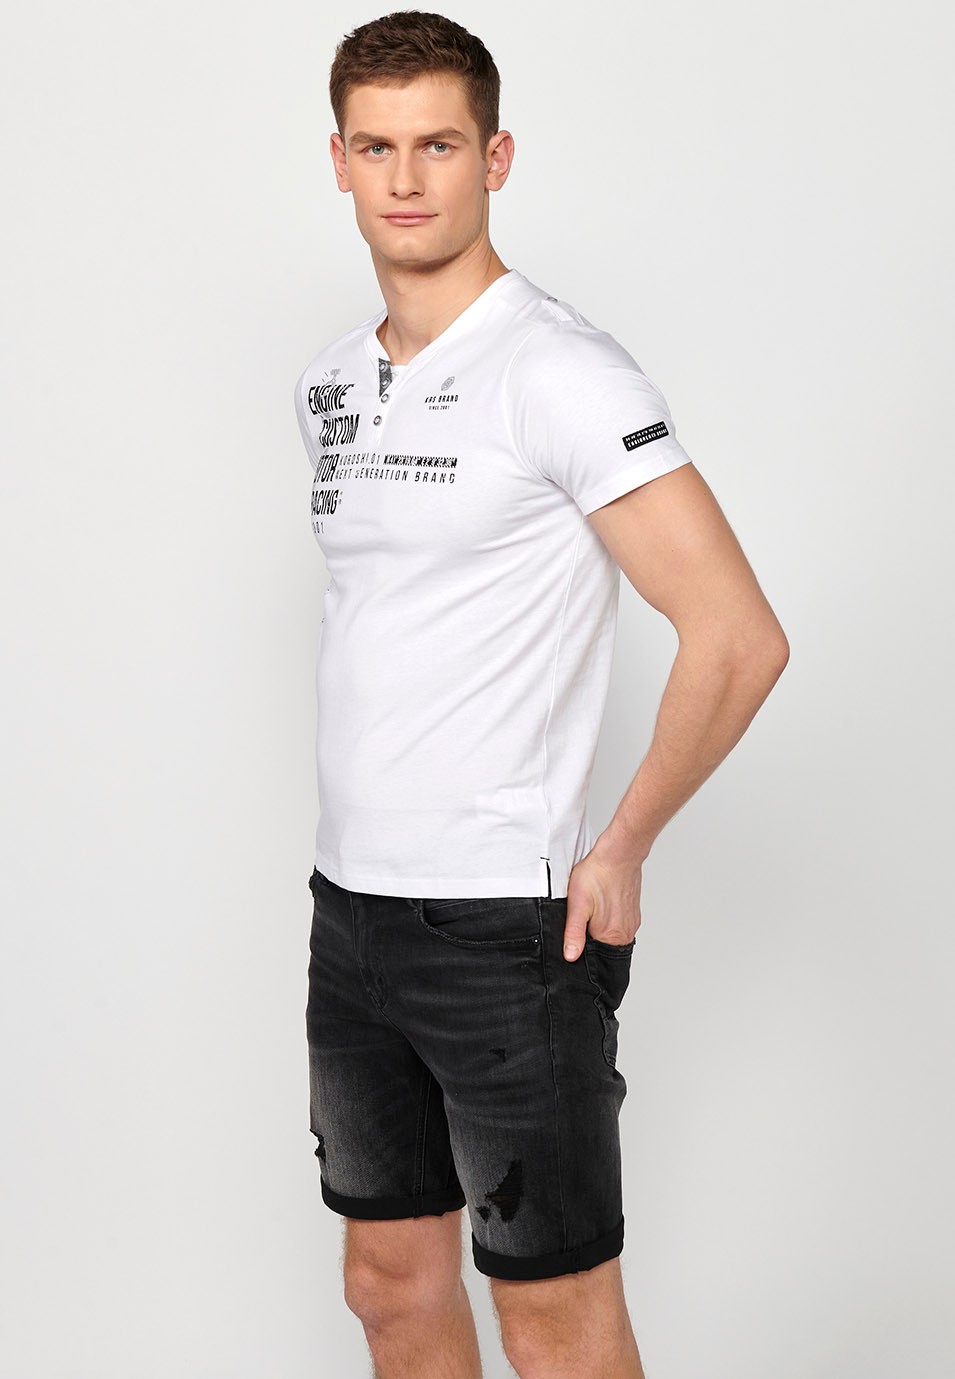 Camiseta de manga corta de algodon, cuello redondo con abertura abotonada, color blanco para hombre